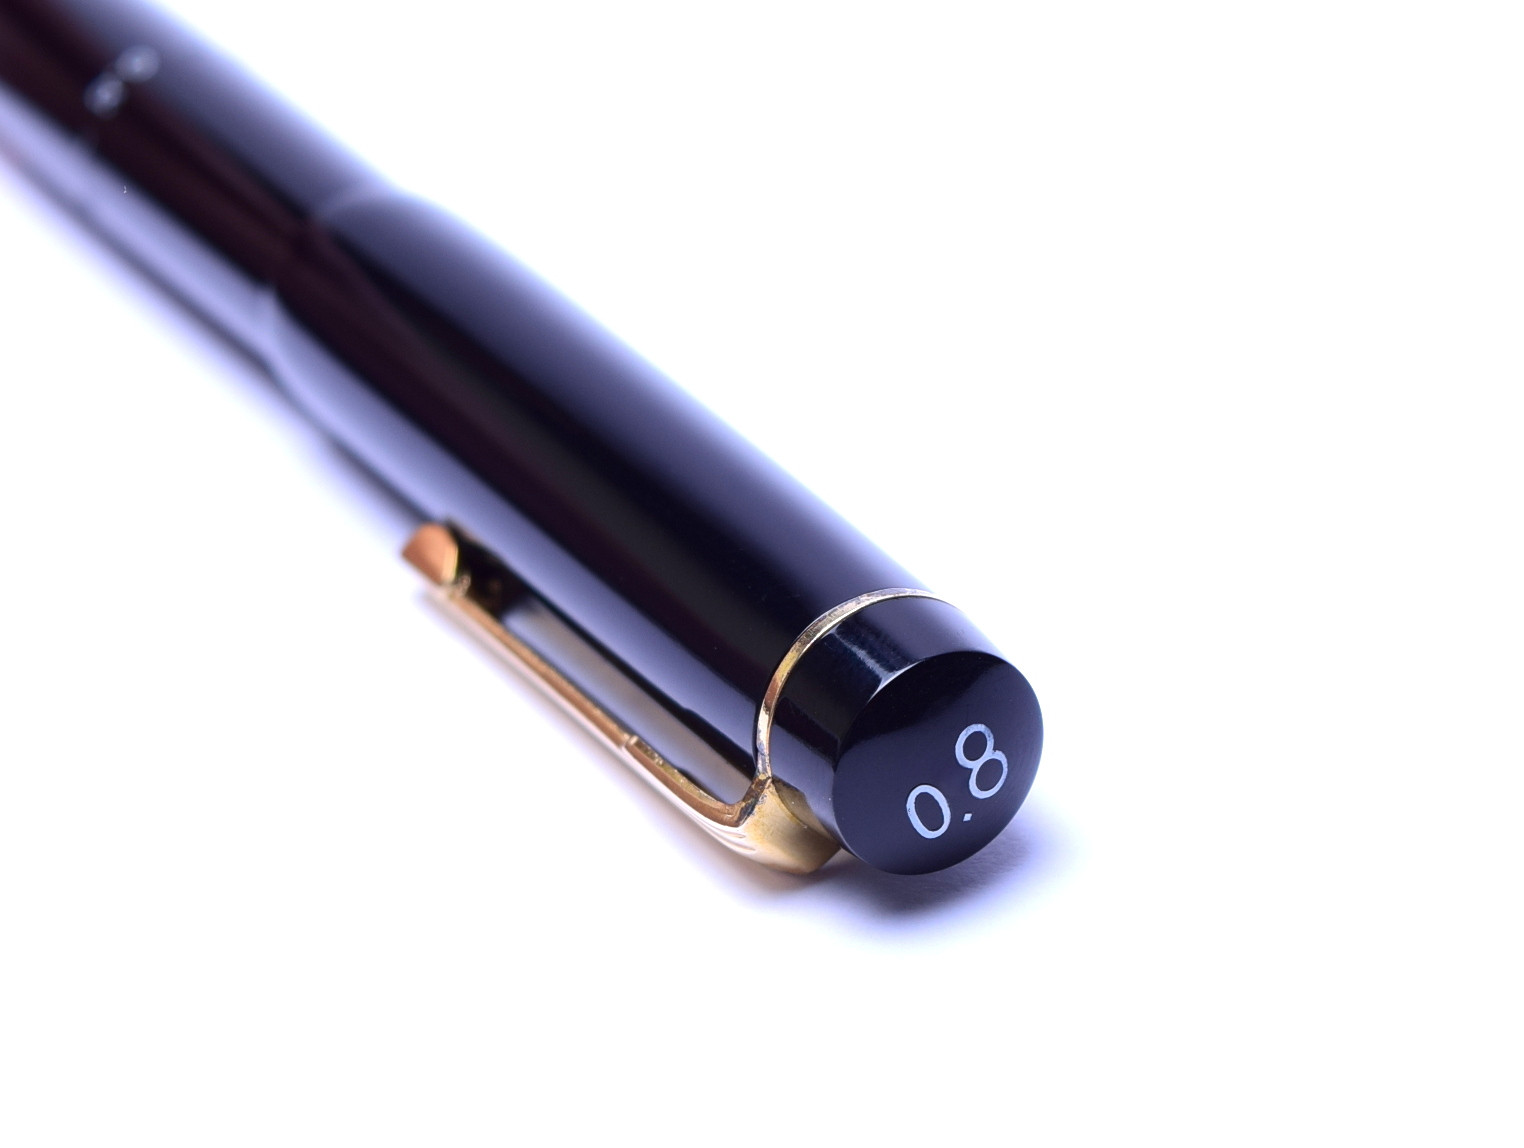 1960s 0.8mm Rotring Rapidograph Tintenkuli Piston Filler Technical Drawing  Pen